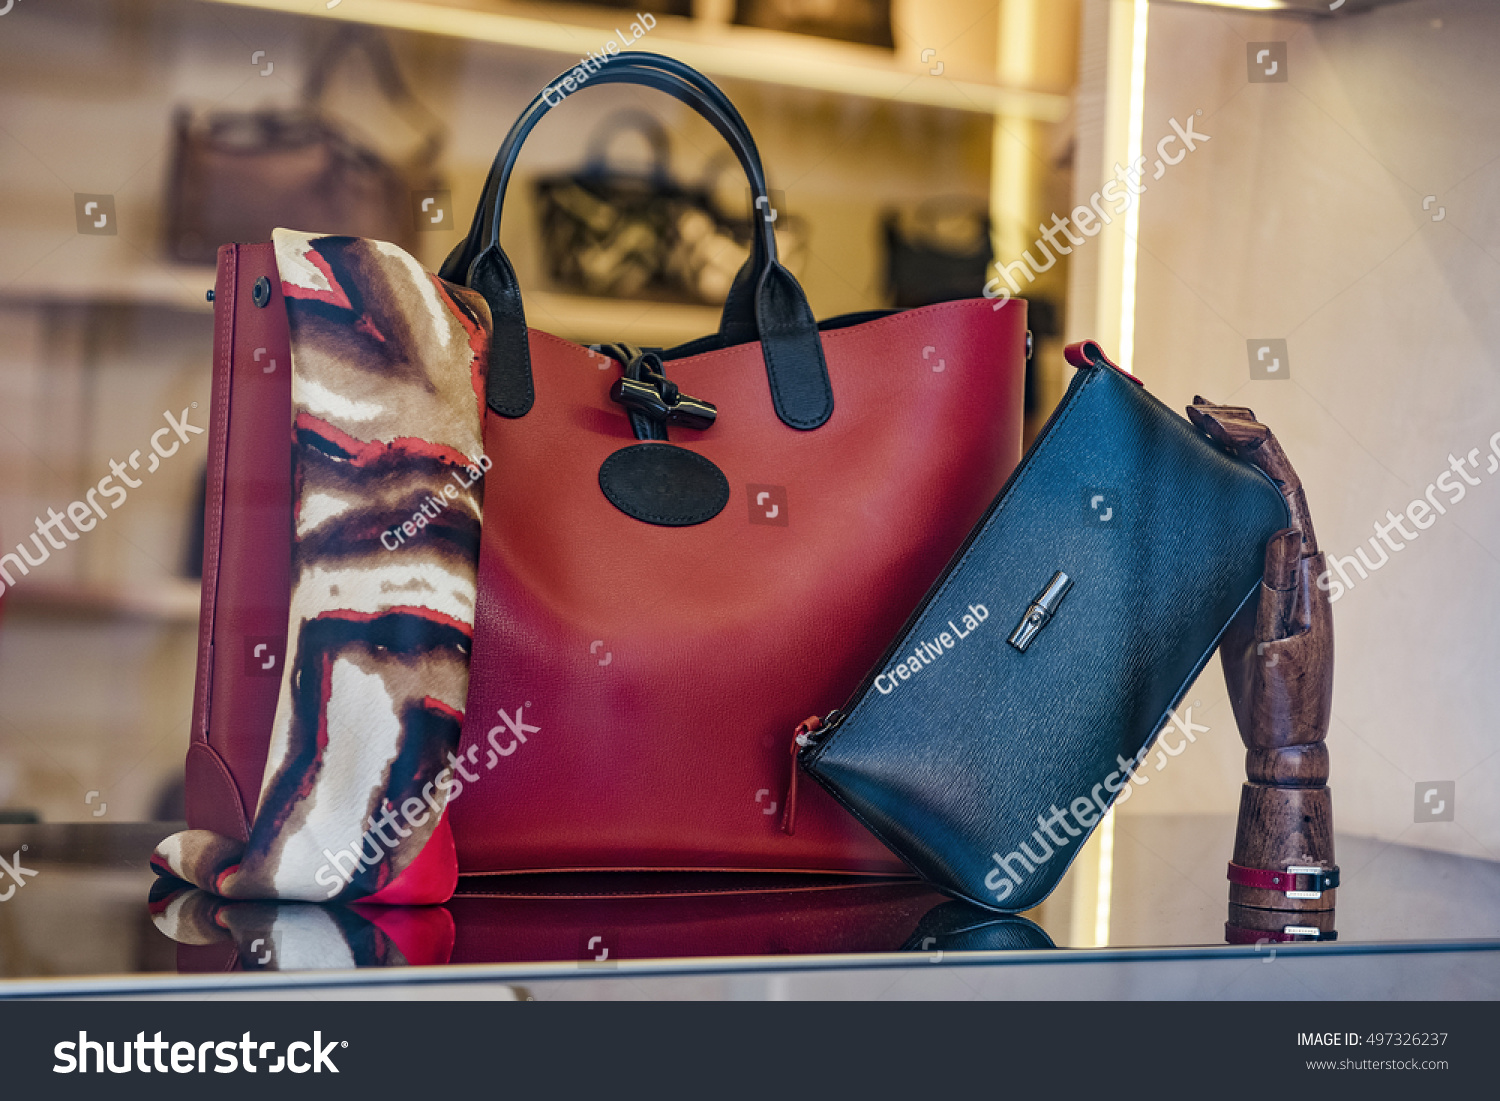 Luxury Handbags Stock Photo 497326237 : Shutterstock